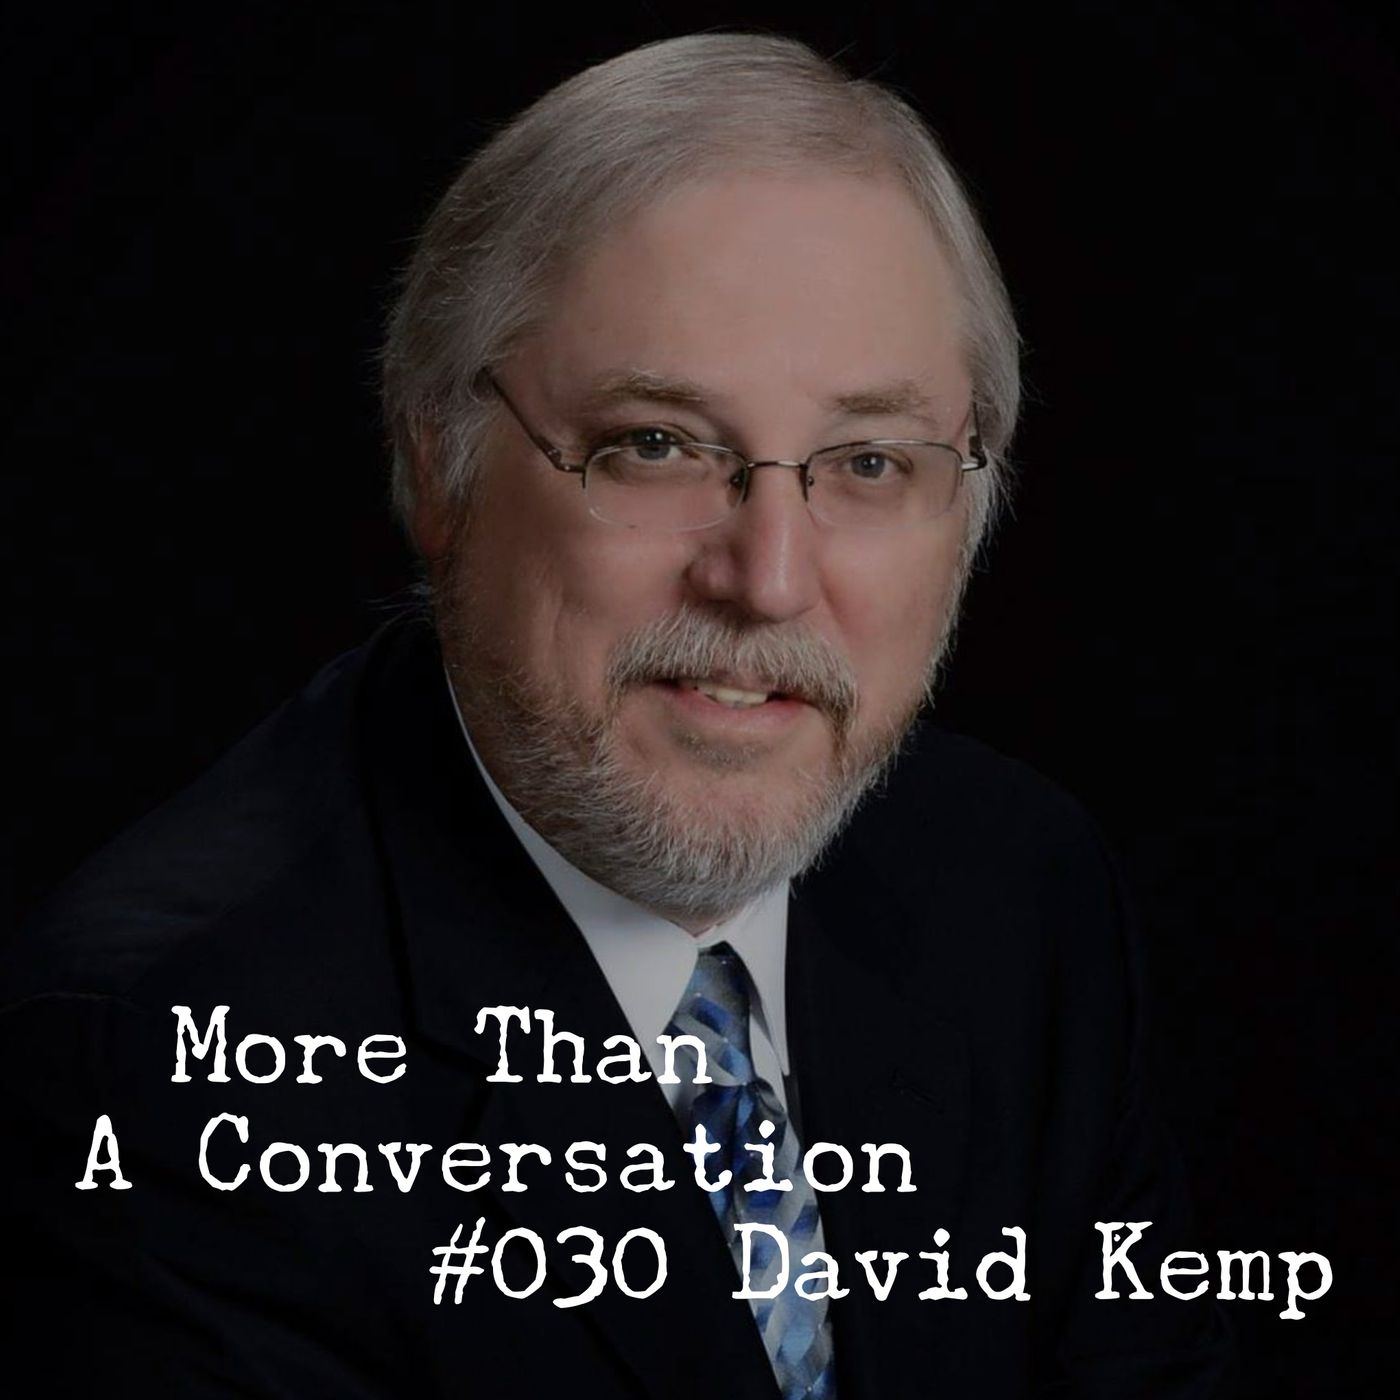 #030 David Kemp, Administrative Bishop, Church of God North Central Region